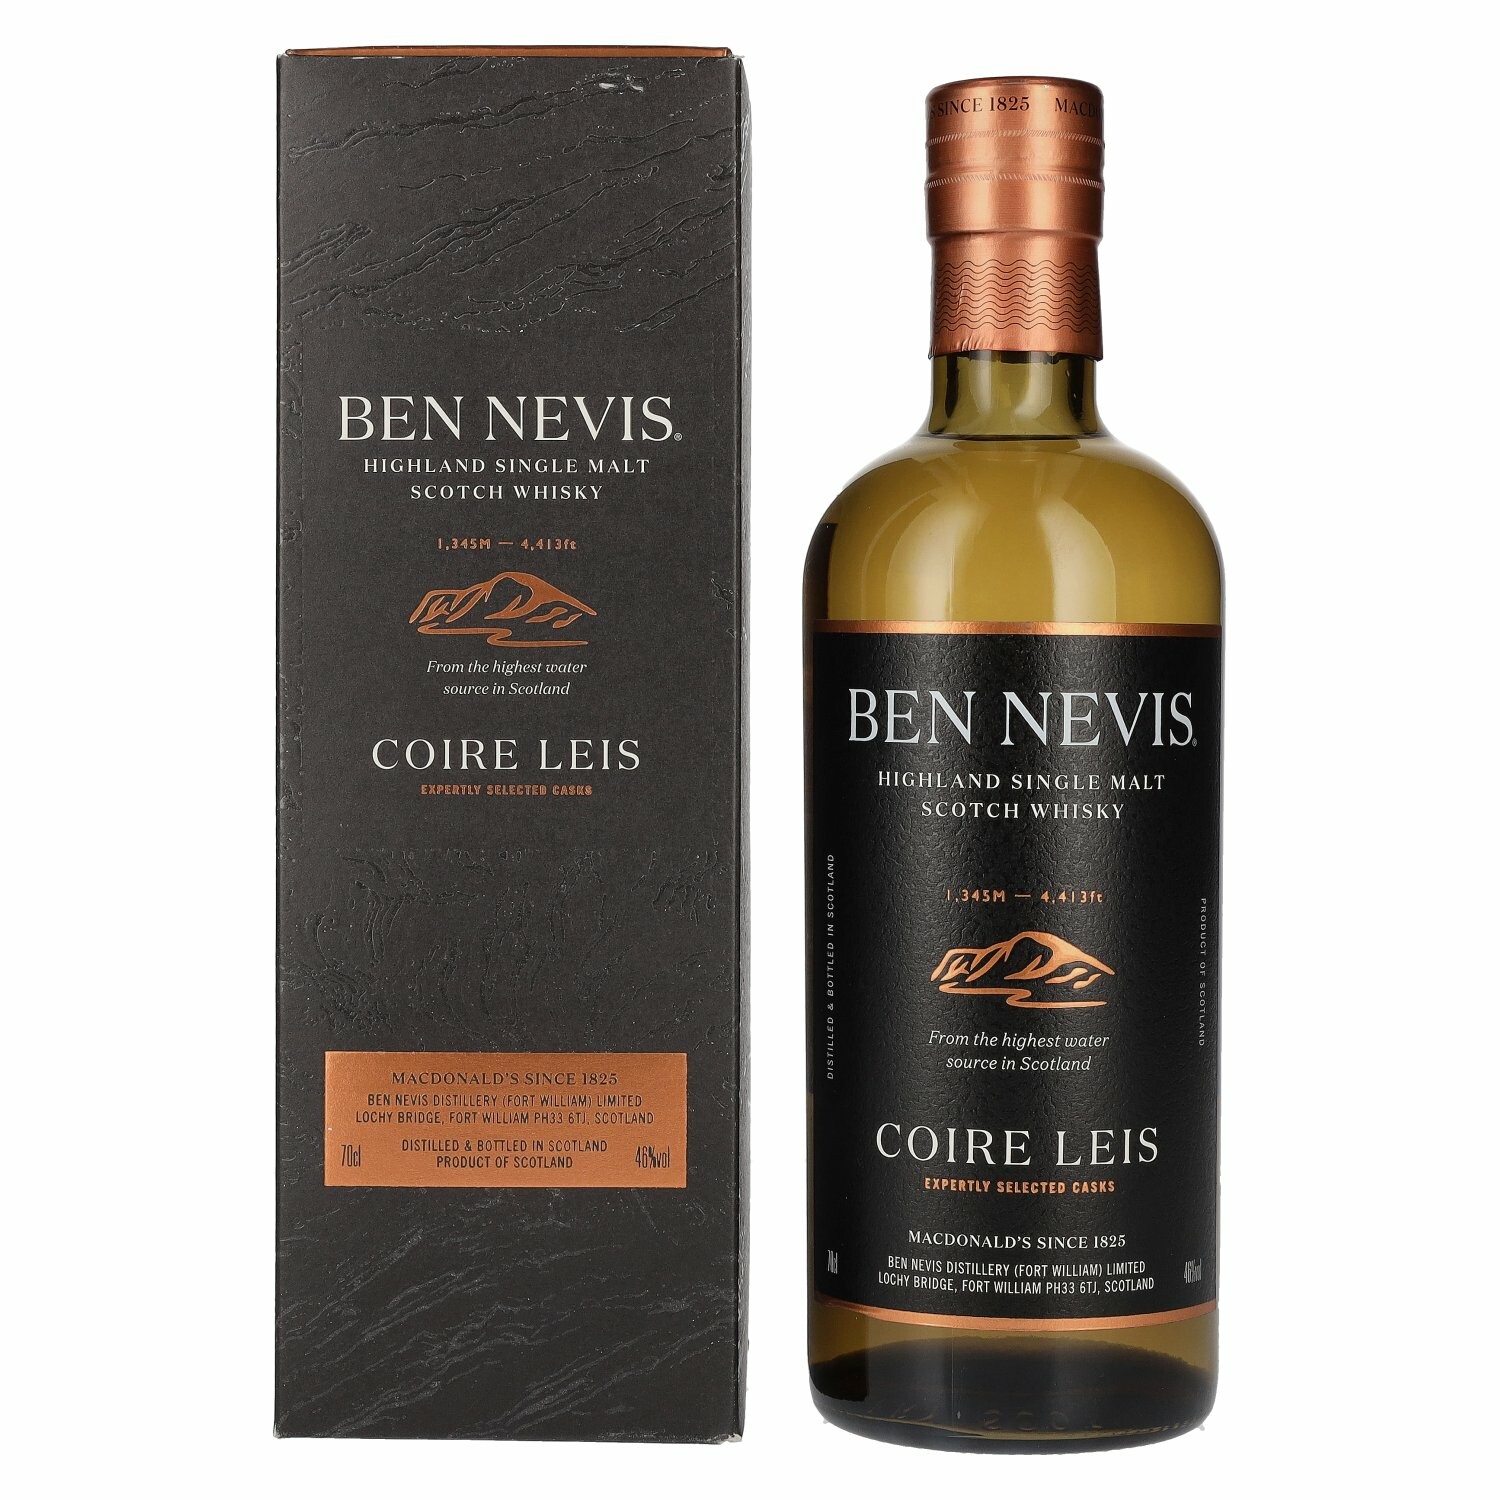 MacDonald's Ben Nevis COIRE LEIS Highland Single Malt 46% Vol. 0,7l in Giftbox